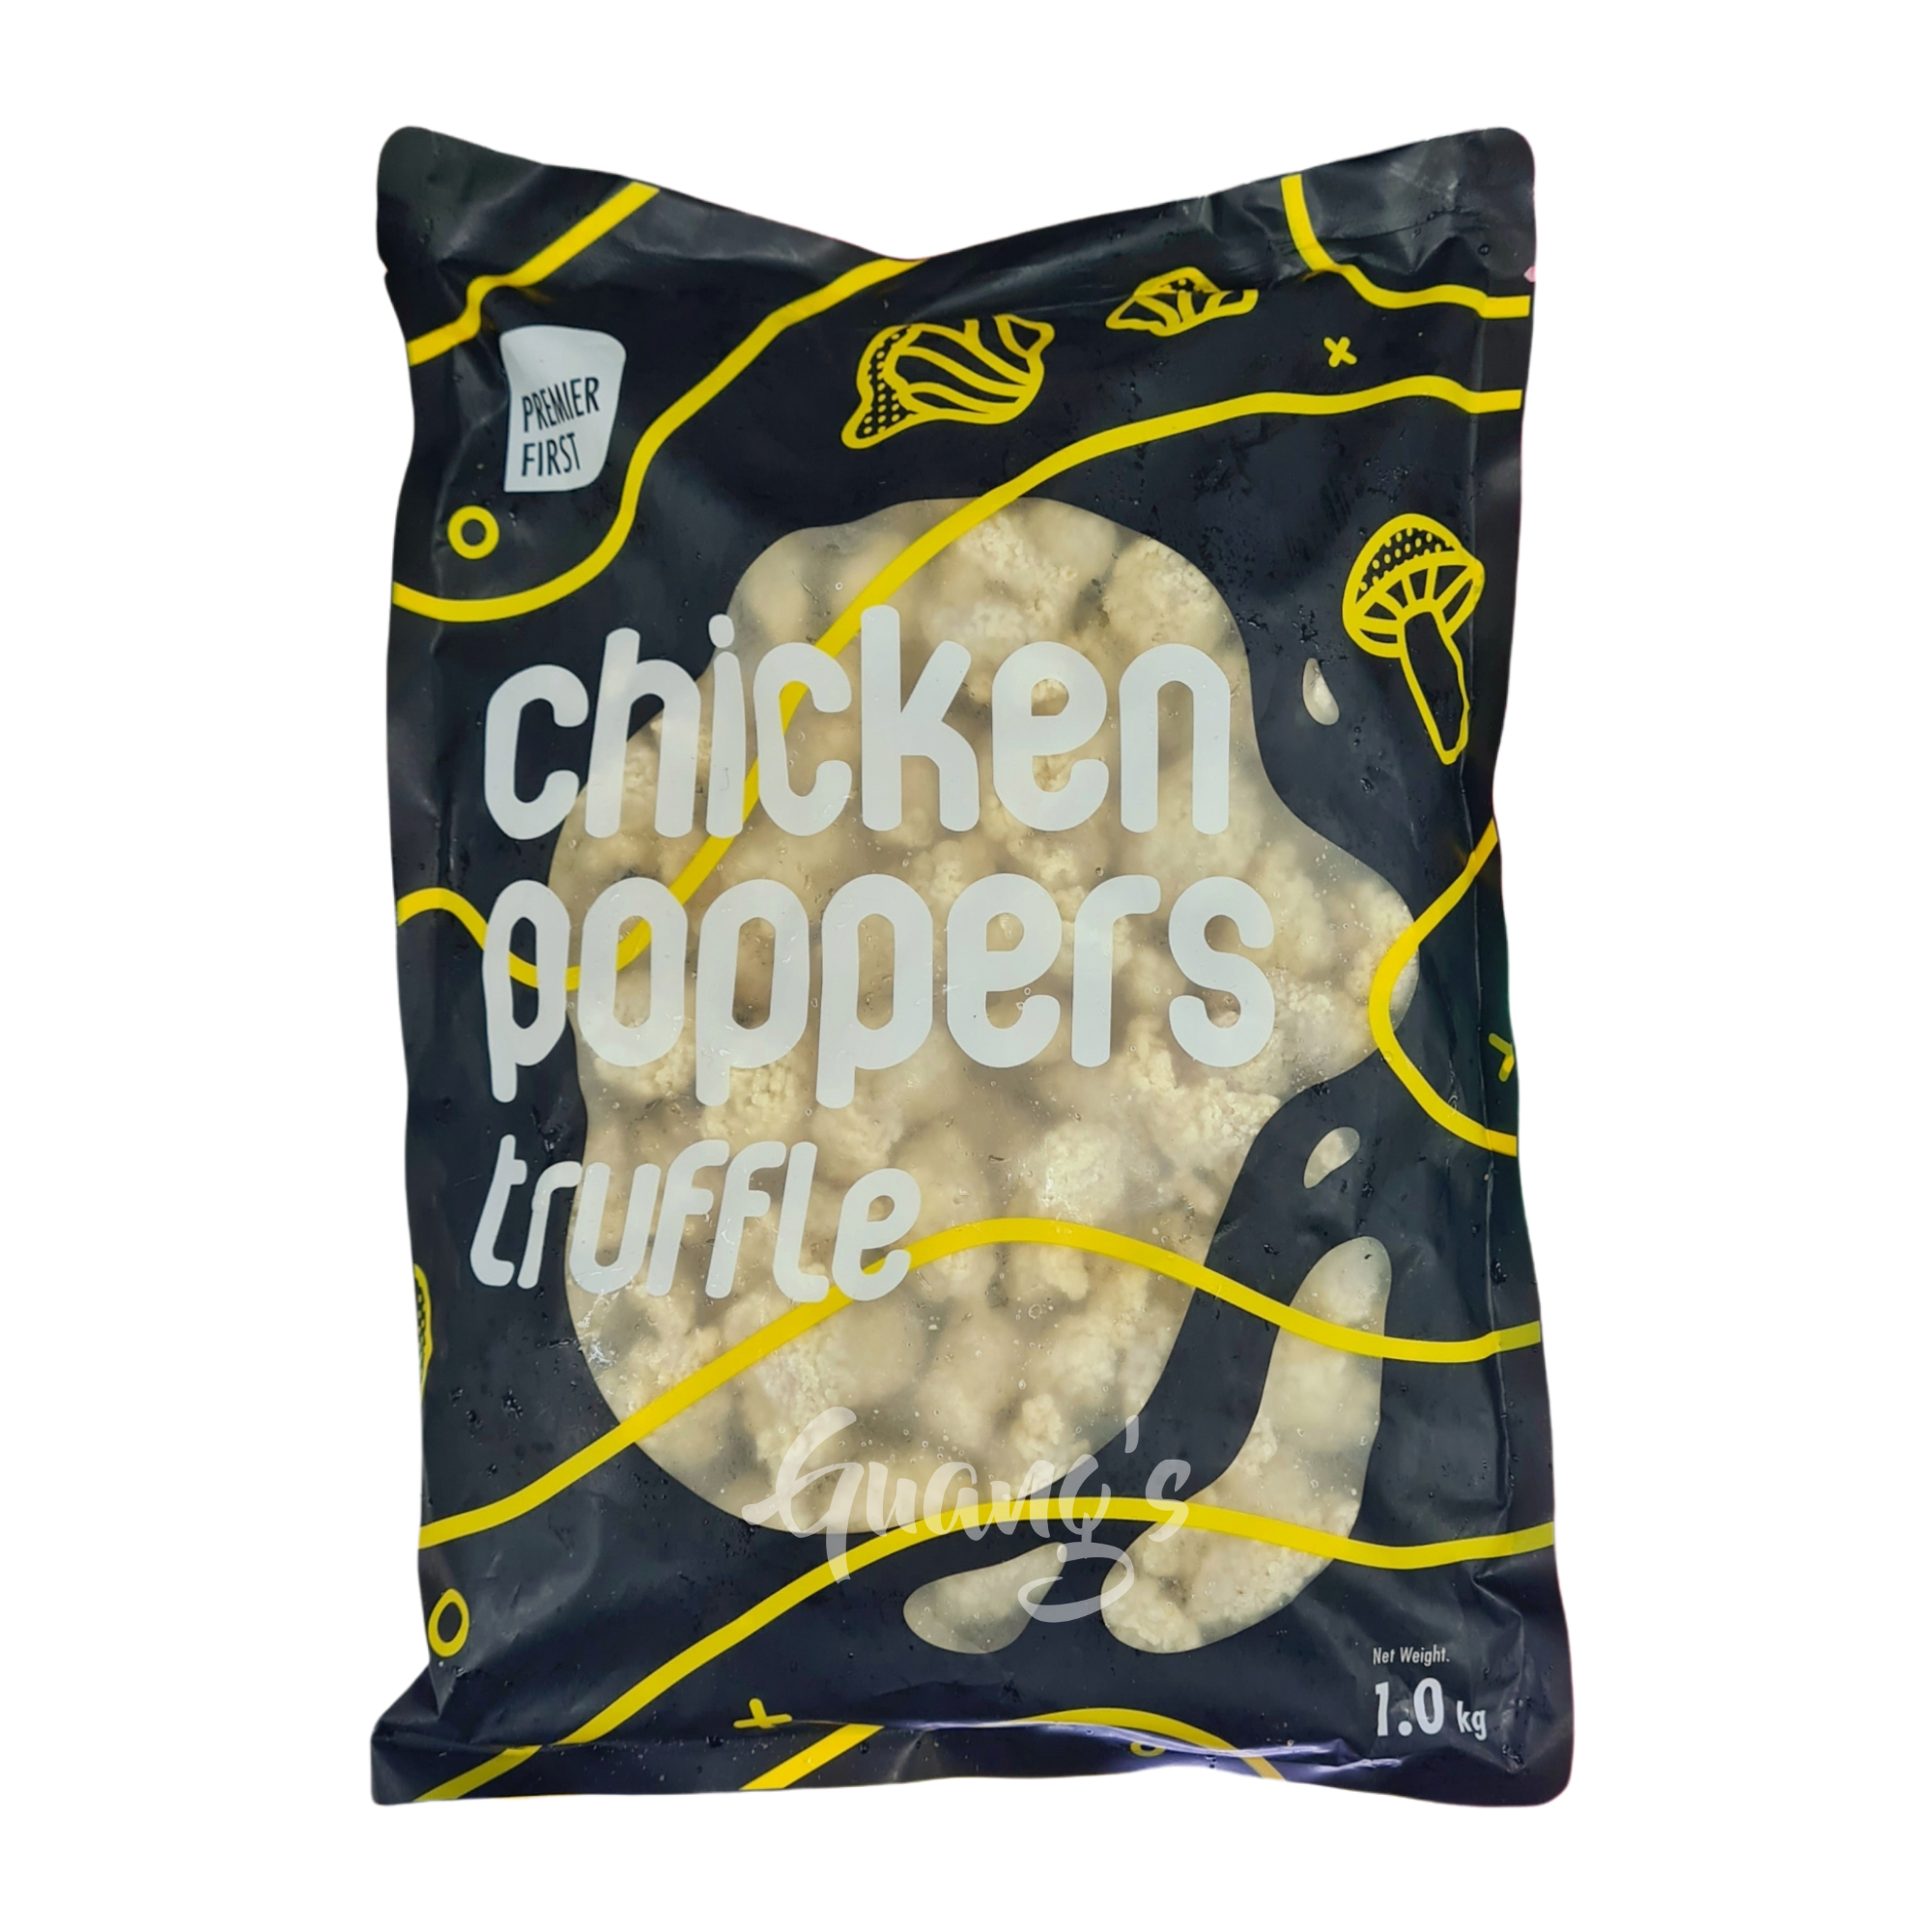 Premier First Chicken Poppers Truffle (1kg)